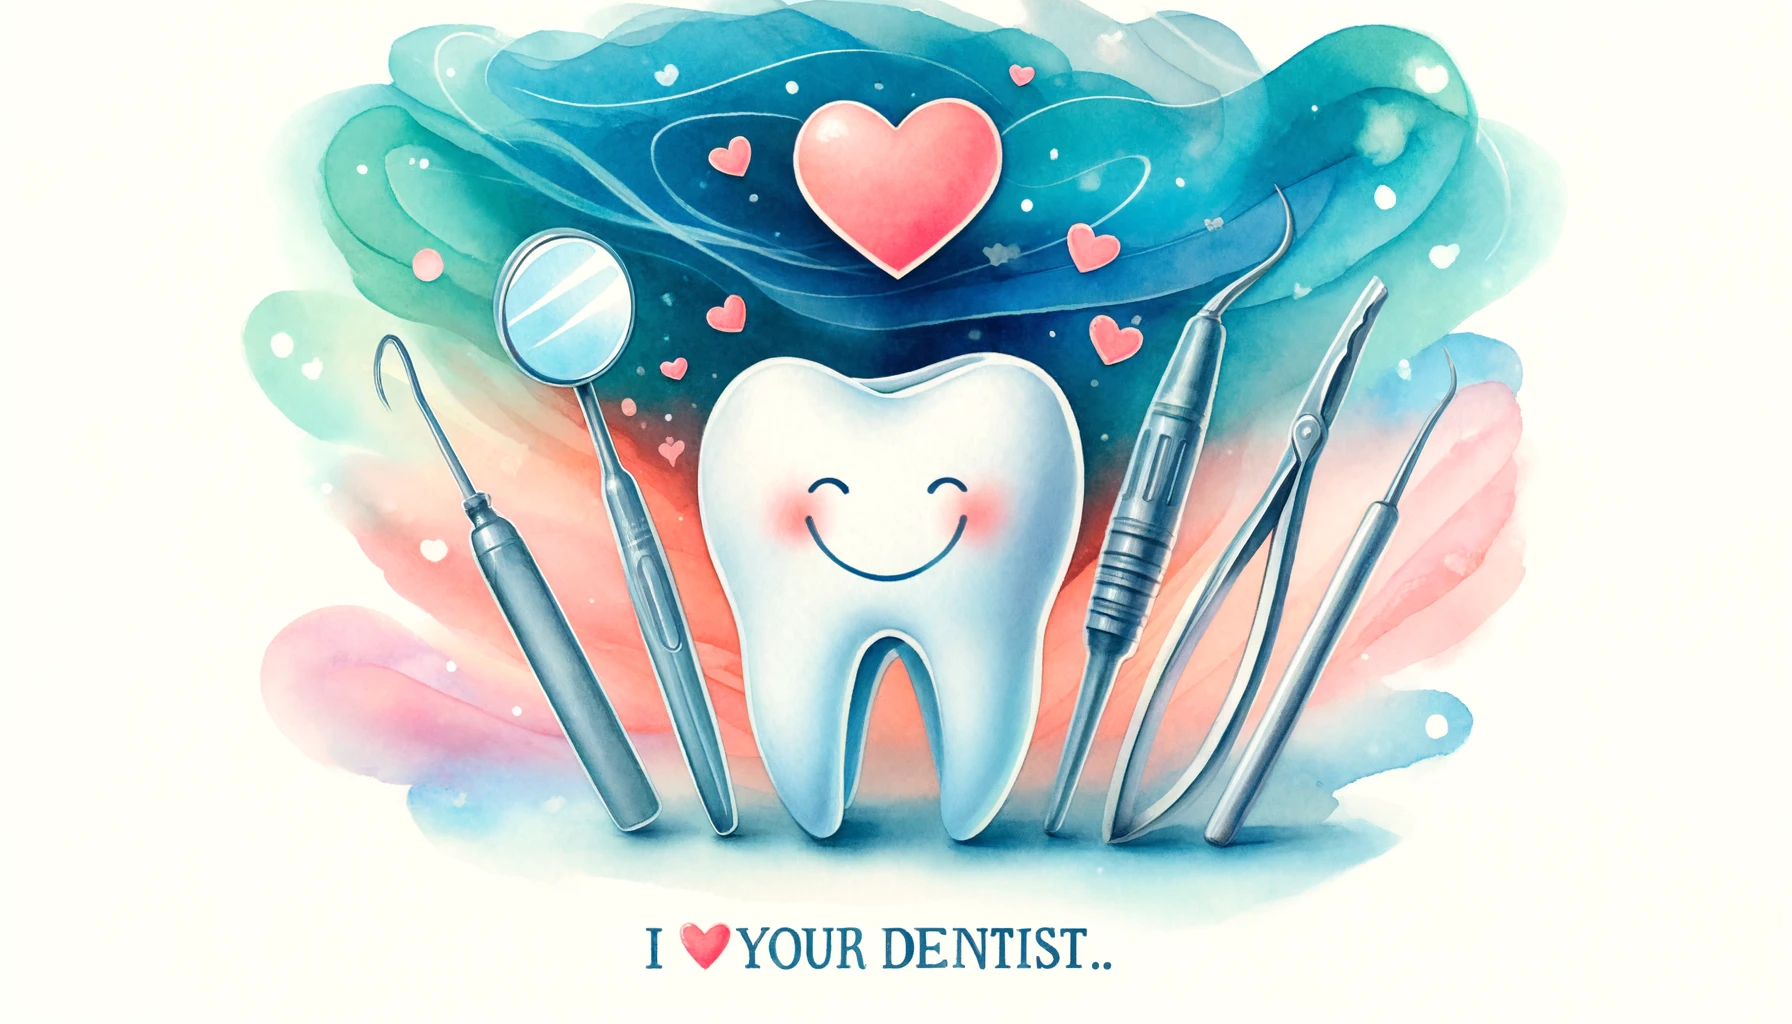 Heartfelt Wishes for National I Love My Dentist Day